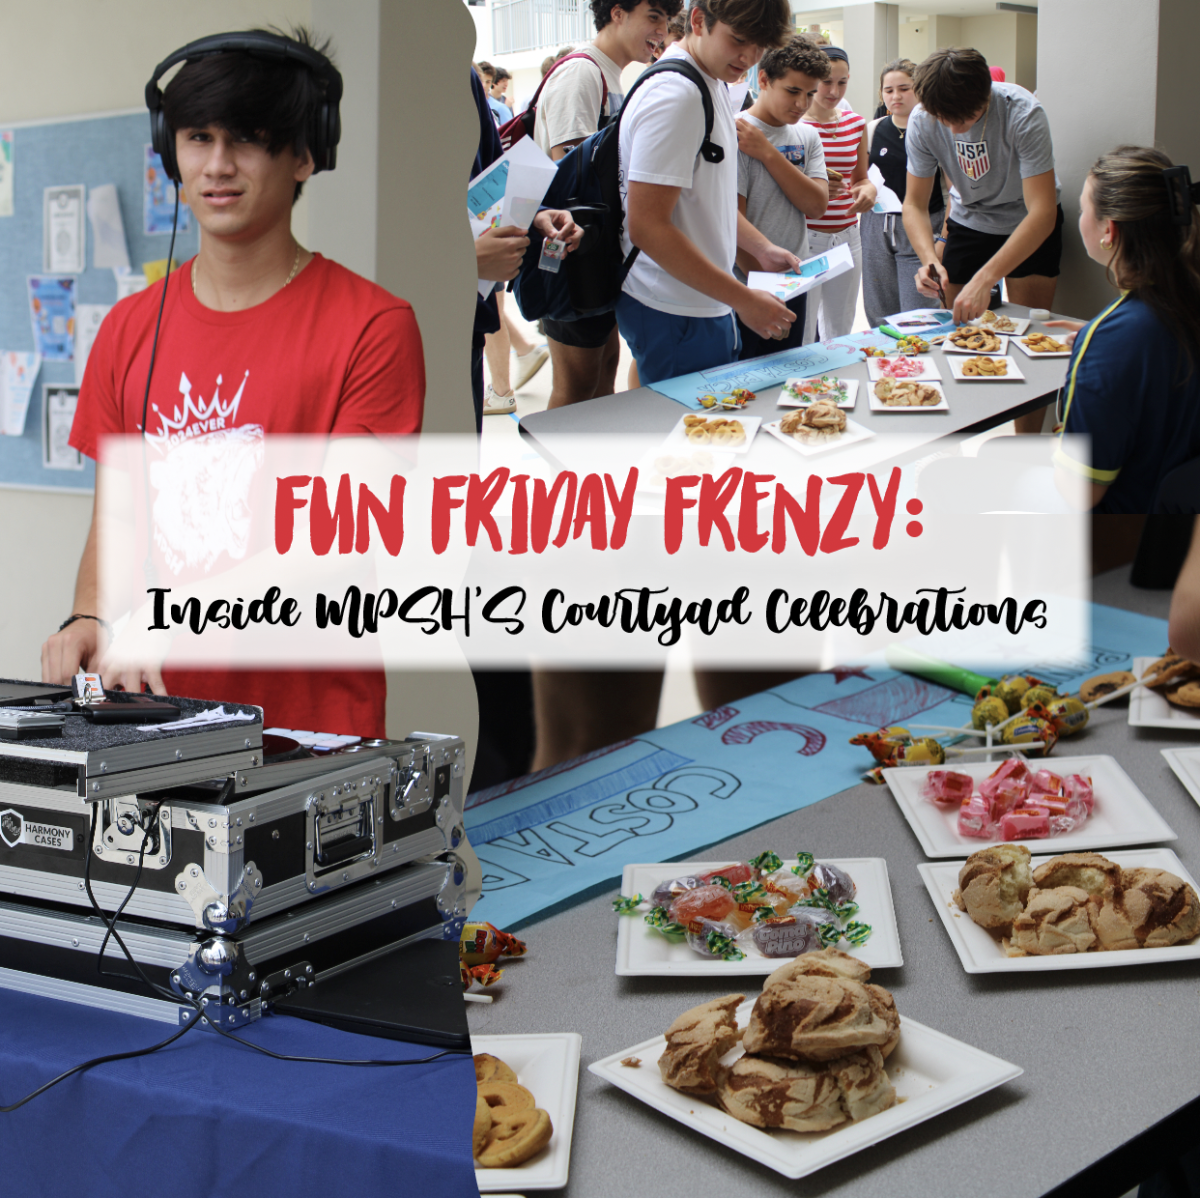 Fun Friday Frenzy: Inside MPSH’s Courtyard Celebrations